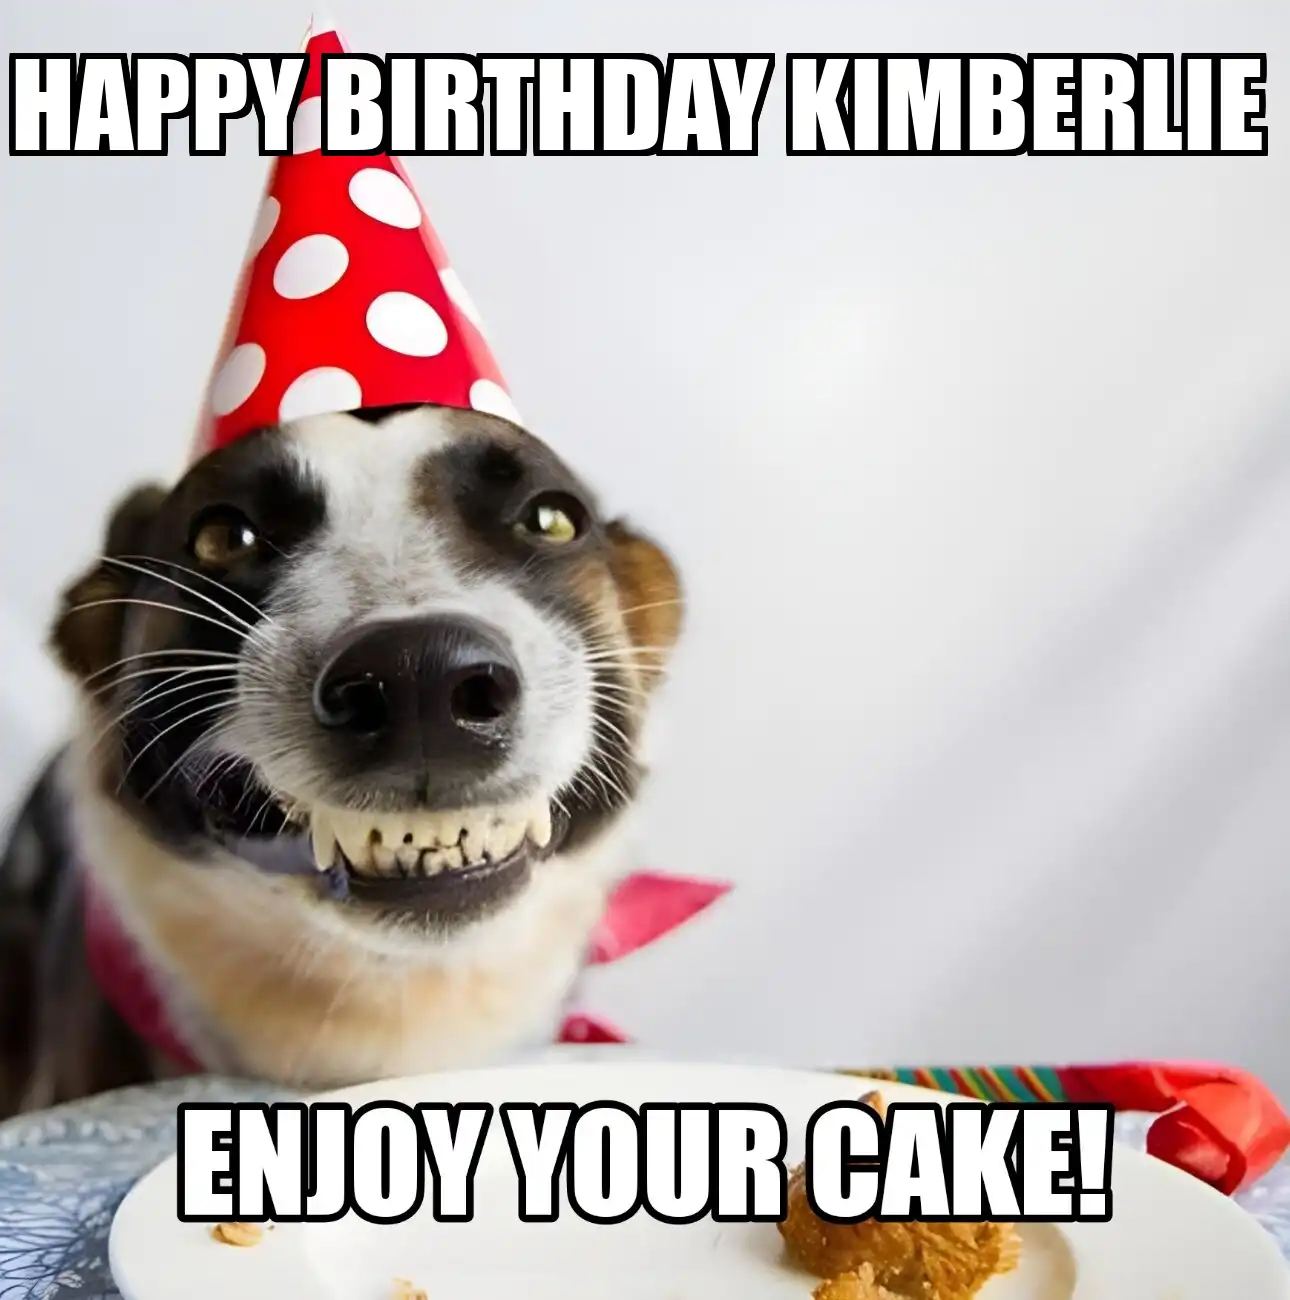 Happy Birthday Kimberlie Enjoy Your Cake Dog Meme